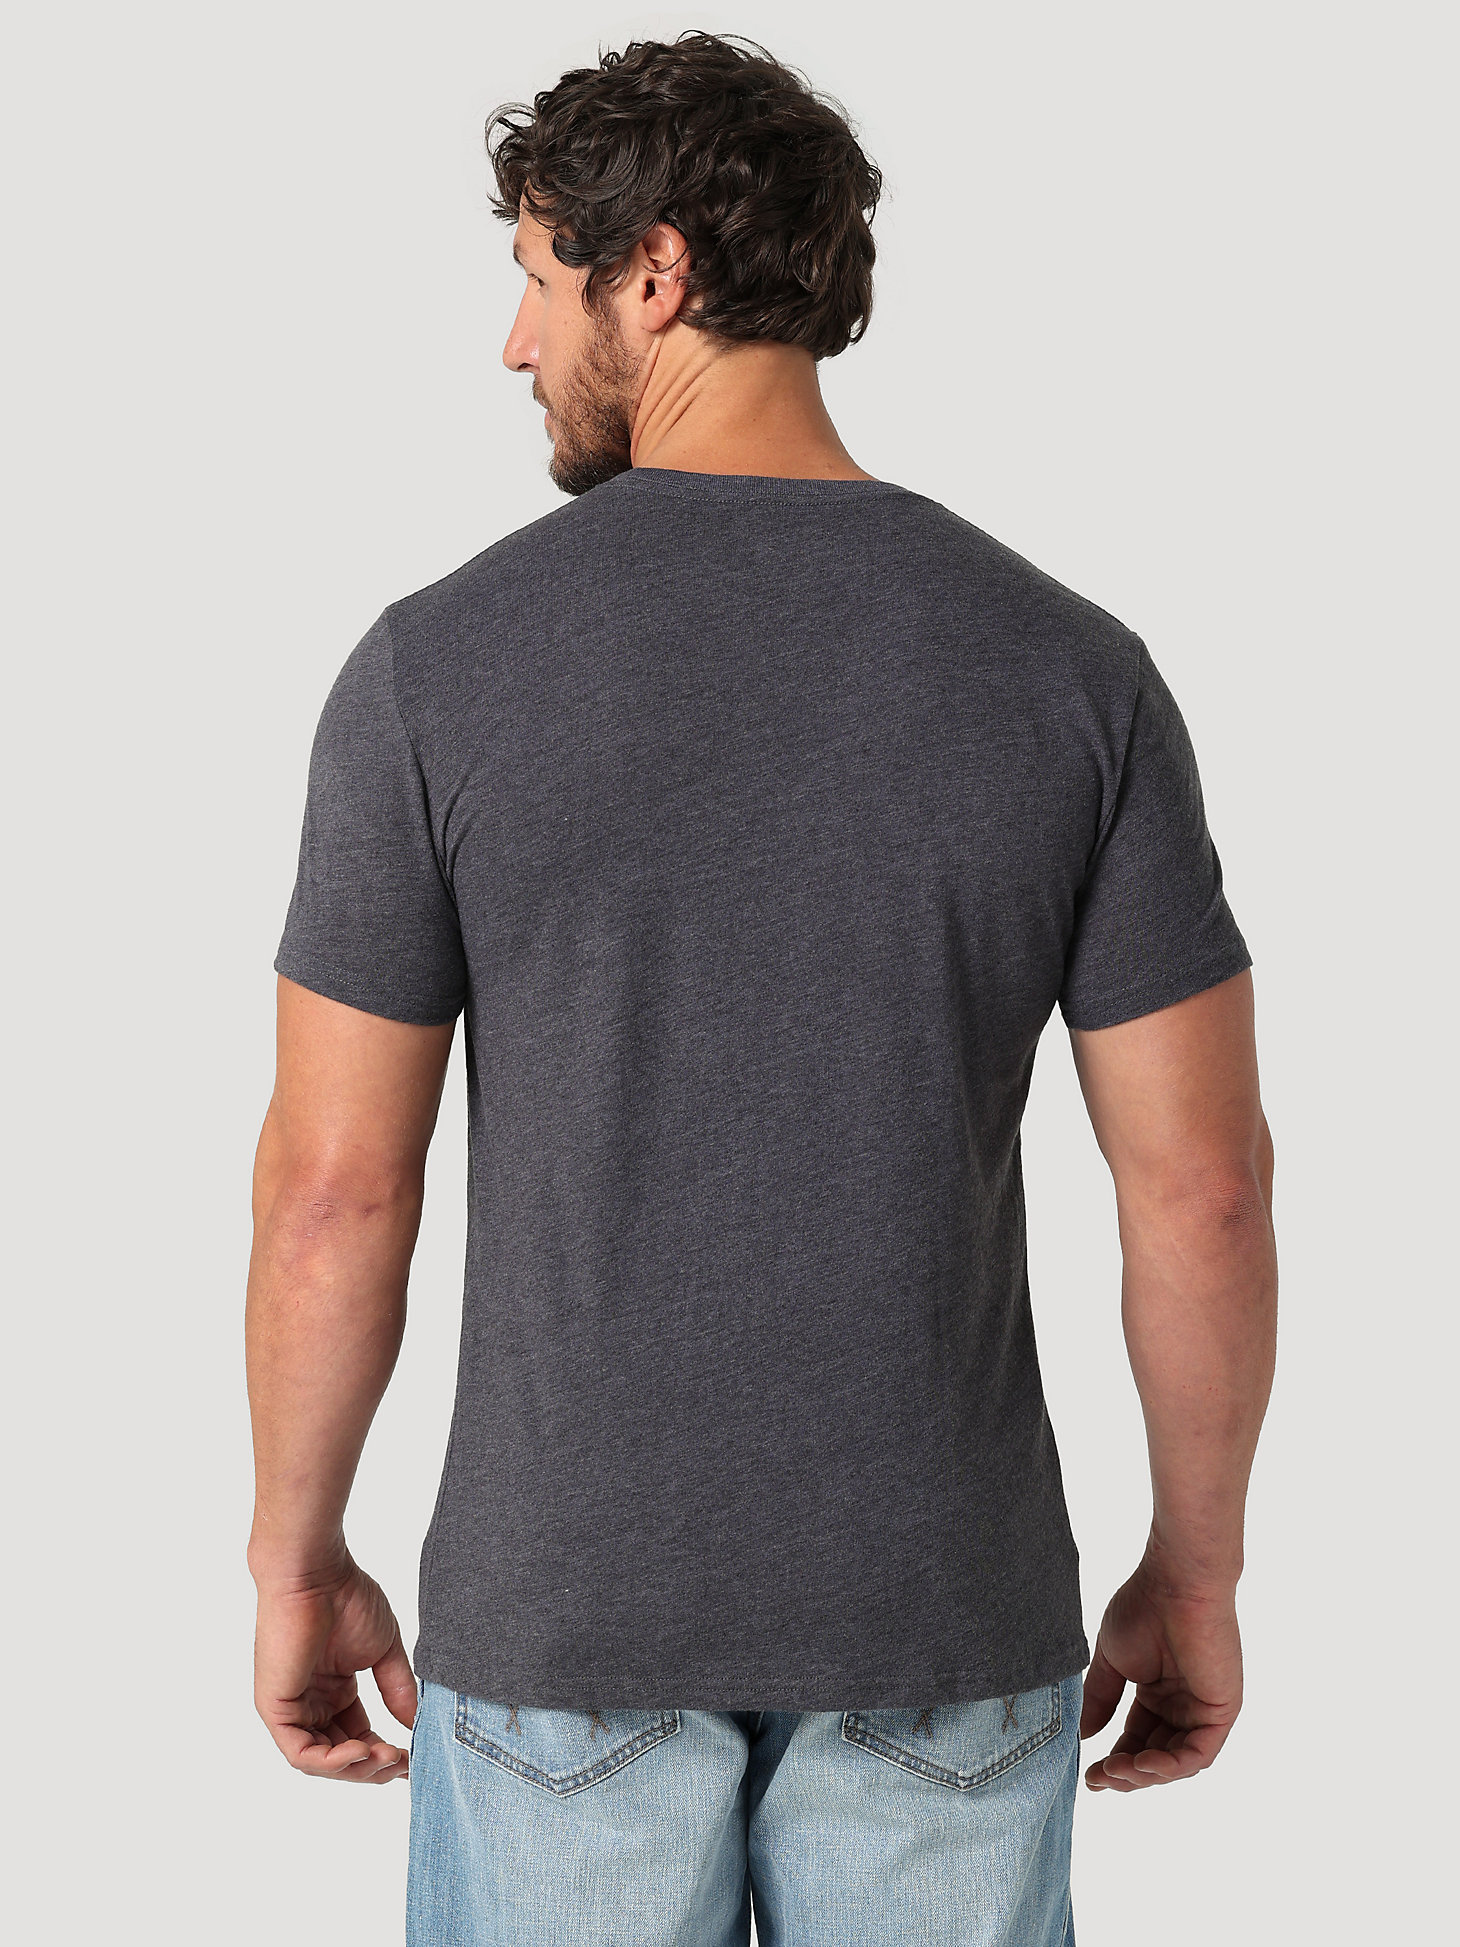 Men's Short Sleeve Paint Stencil Script Logo T-Shirt in Charcoal alternative view 2